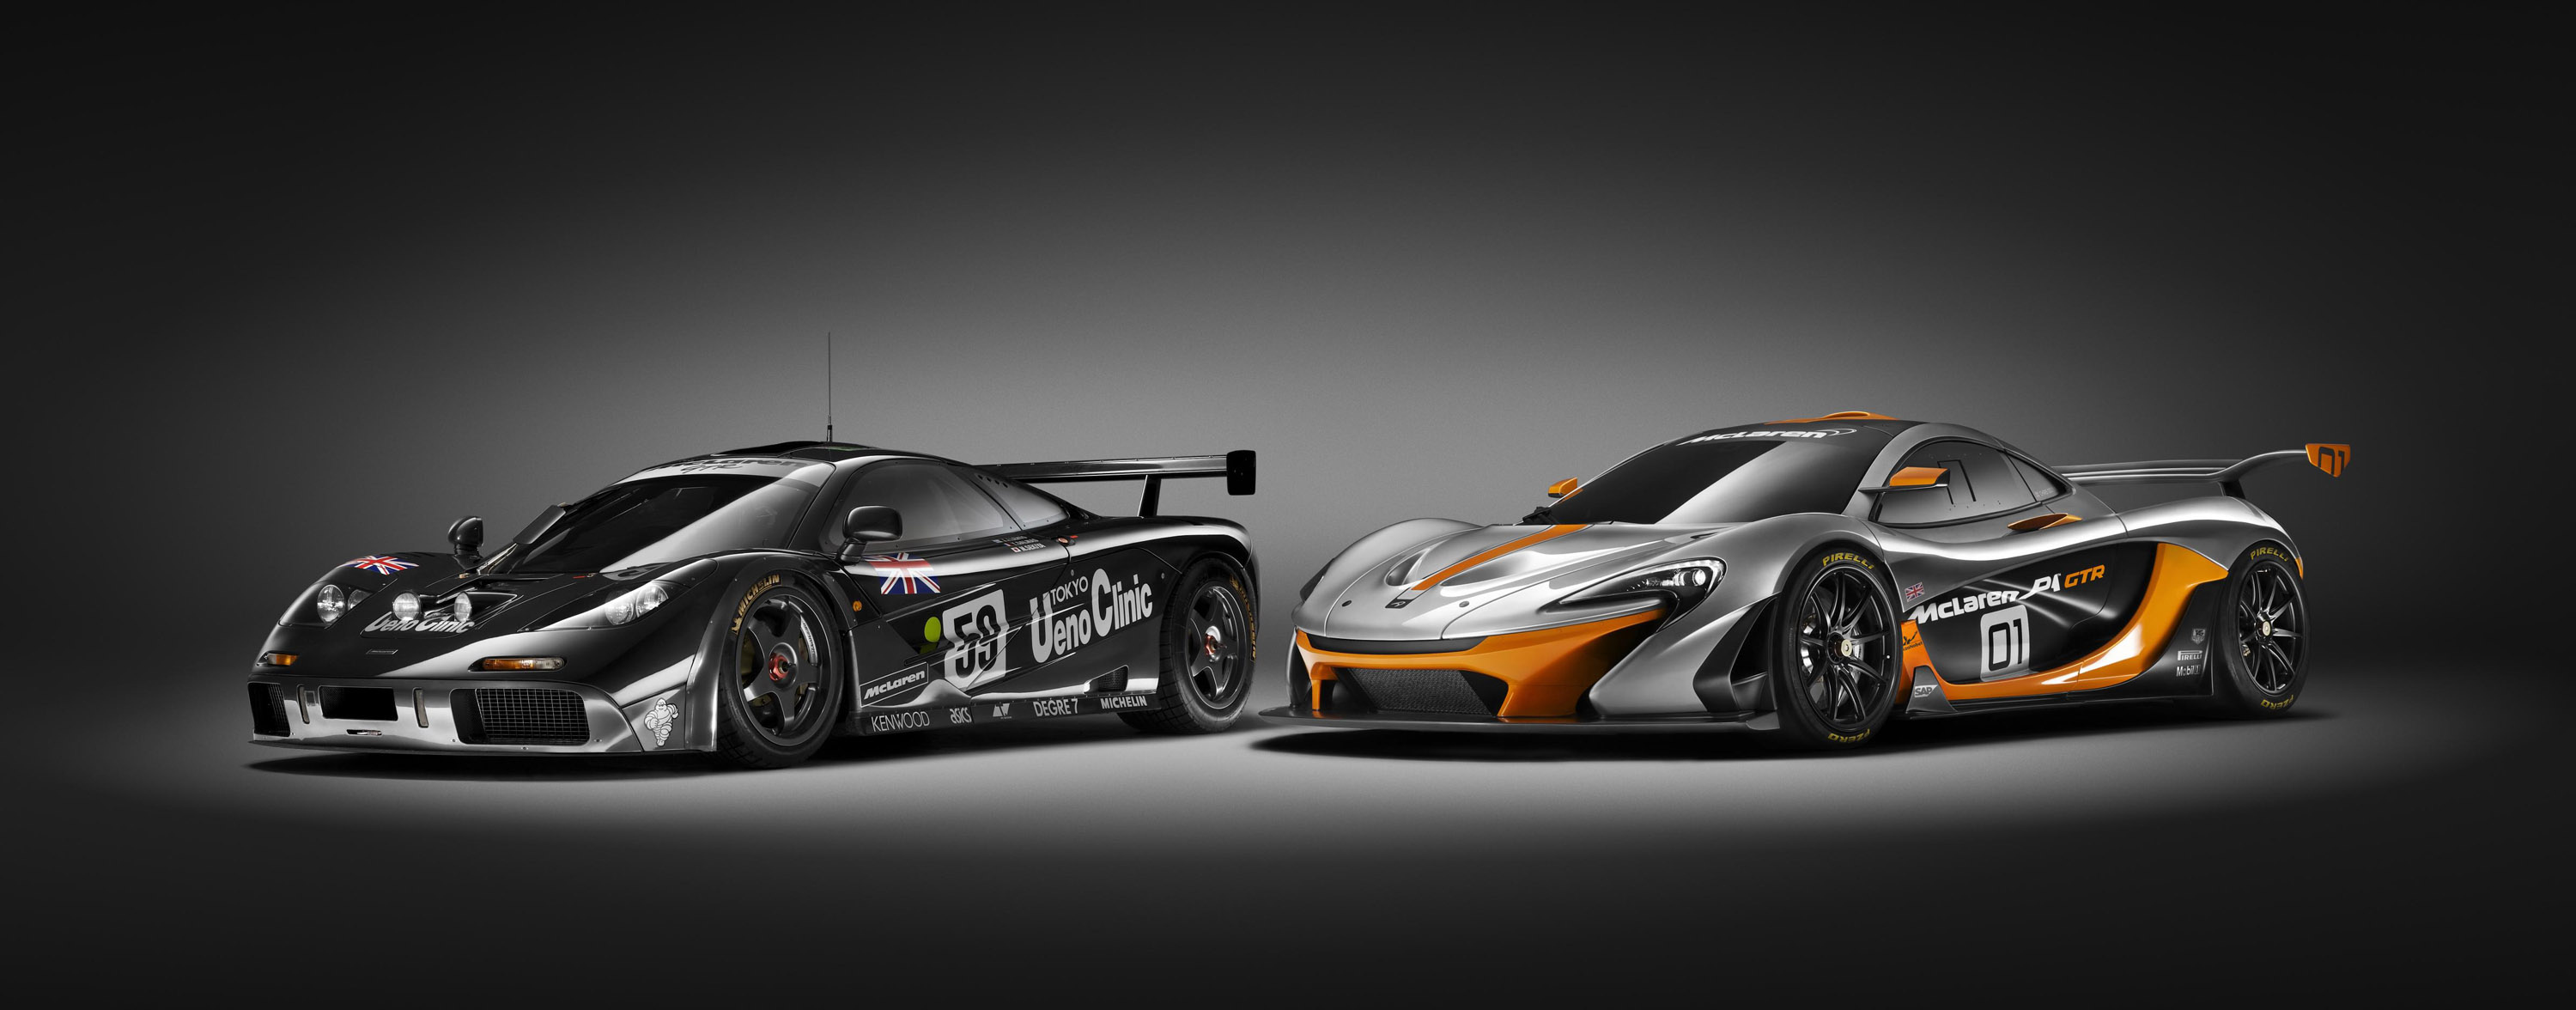 McLaren P1, GTR edition, HD picture, Dynamic sports car, 3000x1180 Dual Screen Desktop